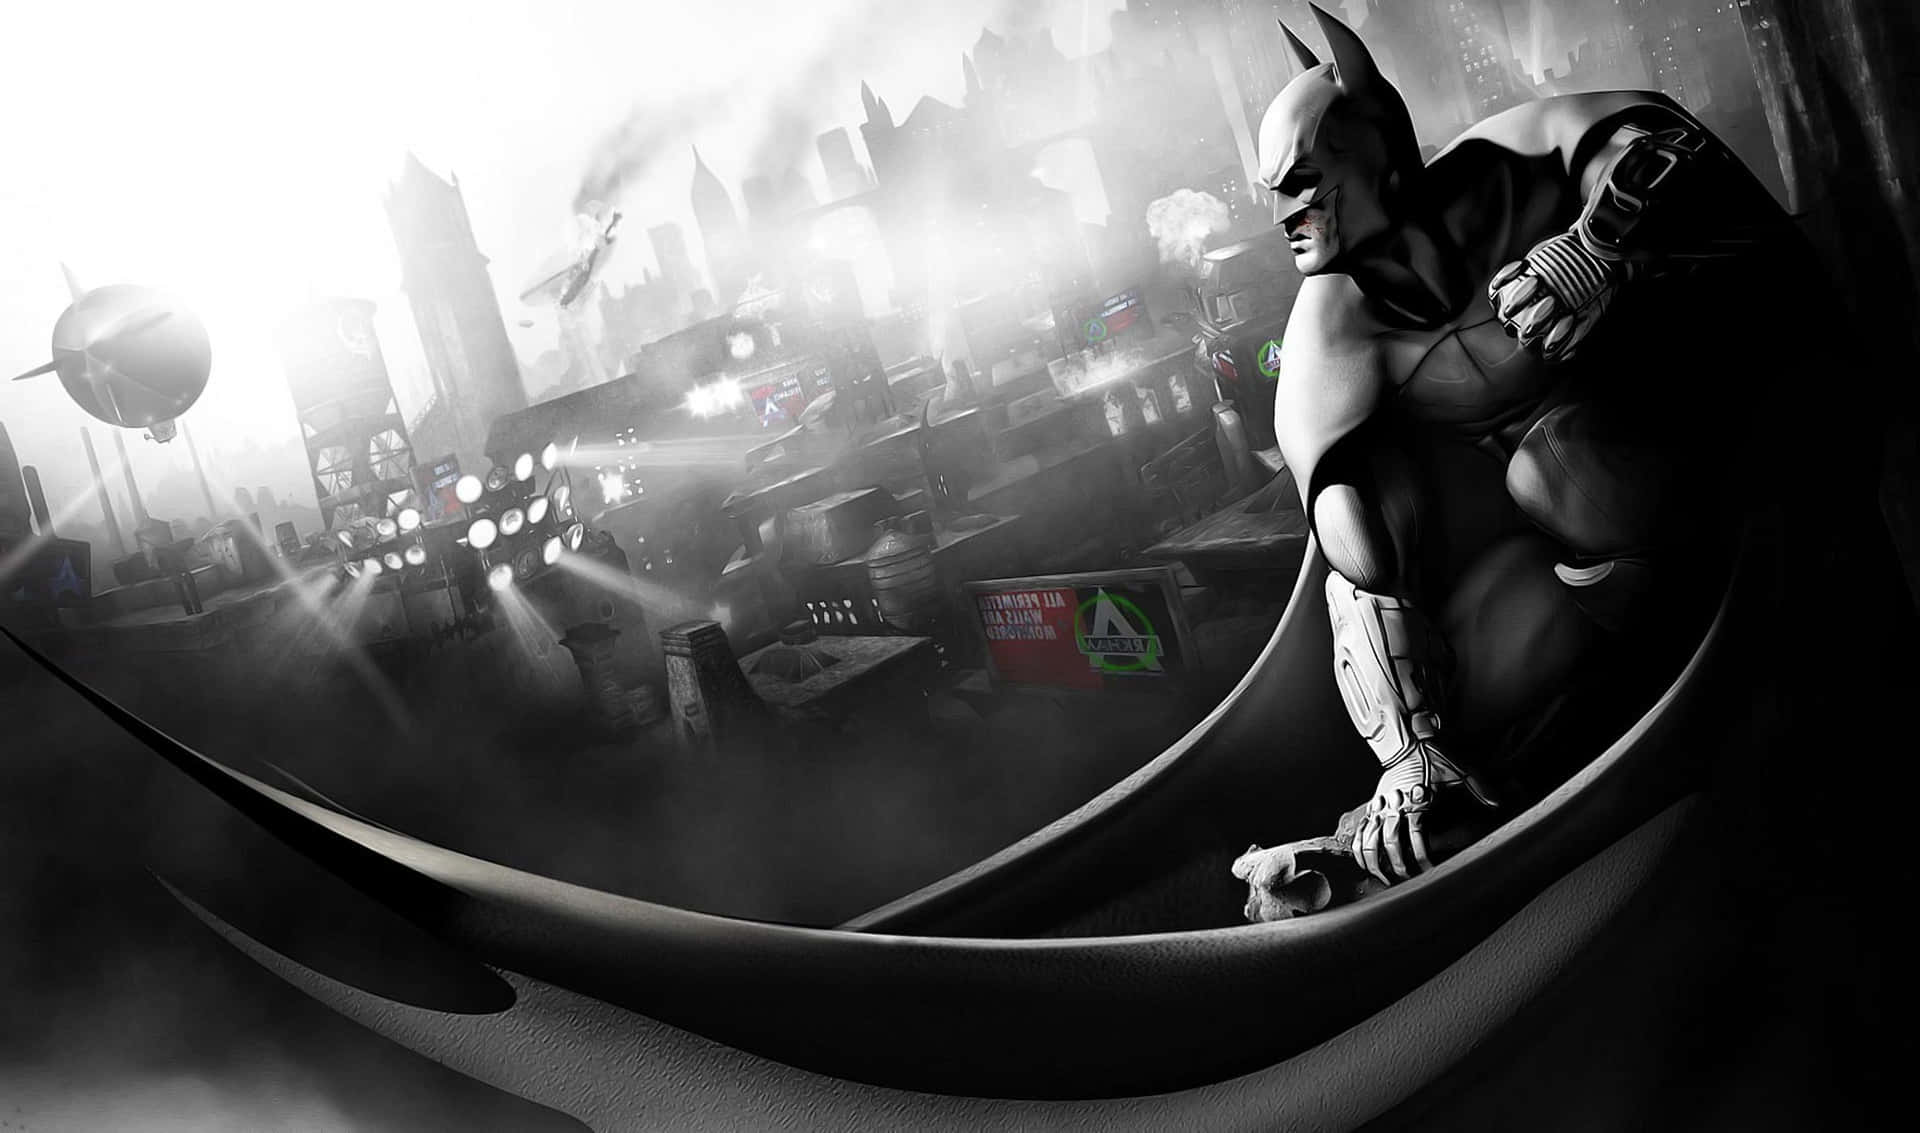 Batman patrolling the dark streets of Gotham